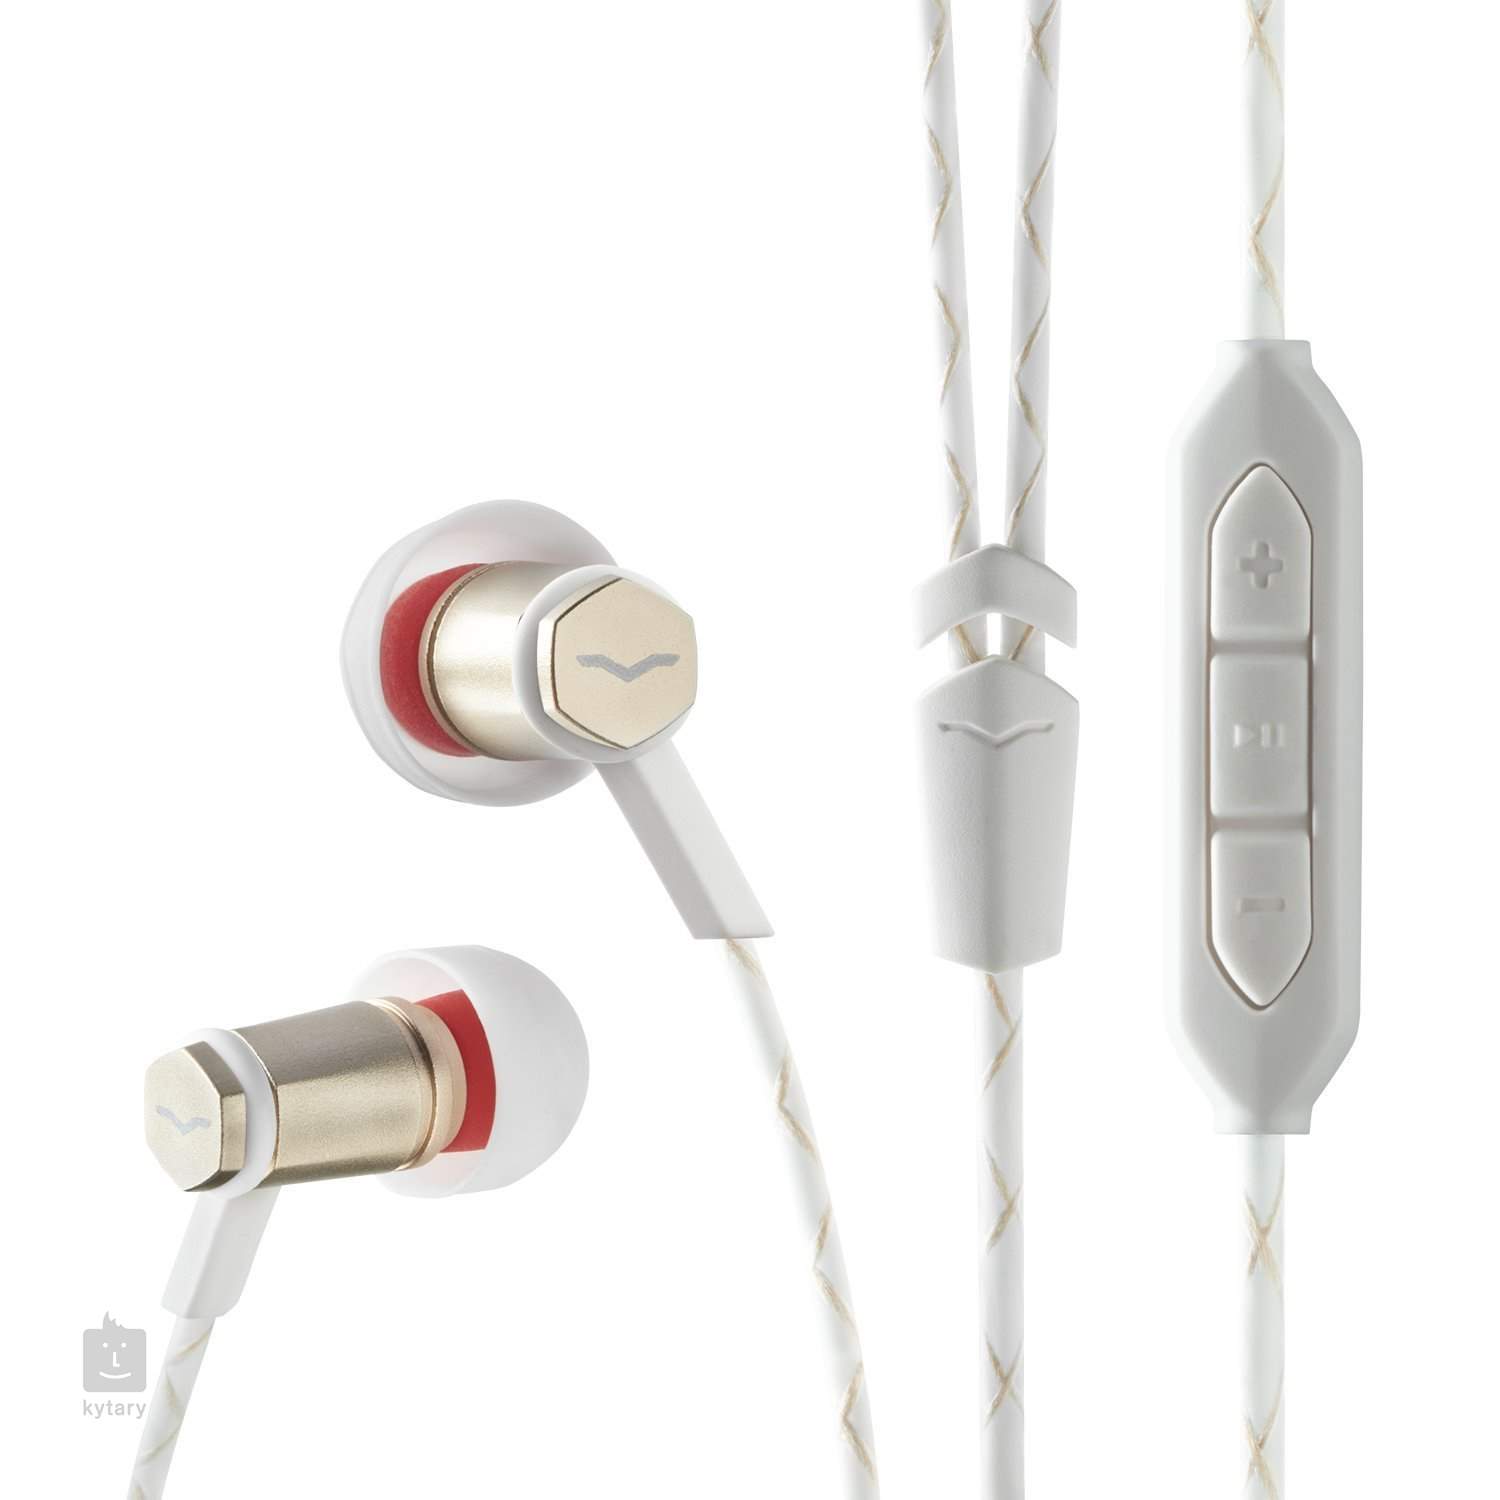 V-MODA Forza In-Ear Headphones (Rose Gold / IOS) (opened) In-Ear Headphones